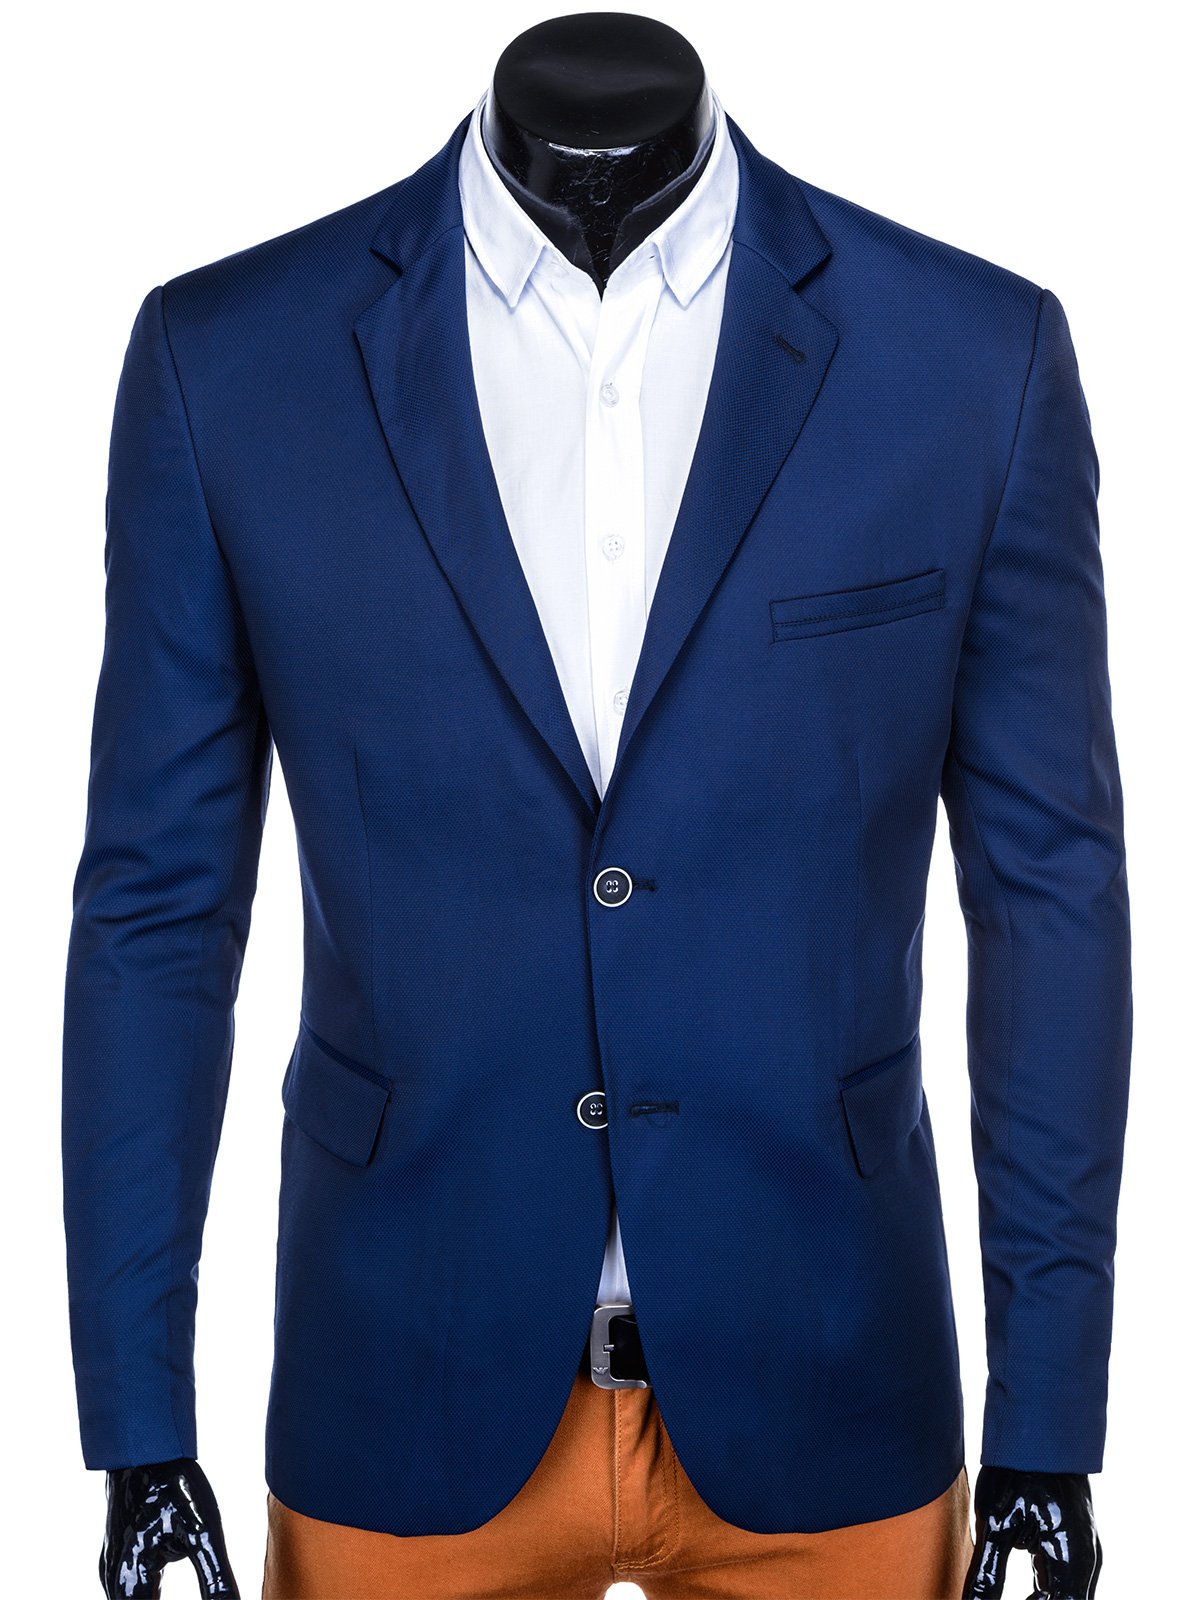 Men's blazer jacket M146 - blue | MODONE wholesale - Clothing For Men